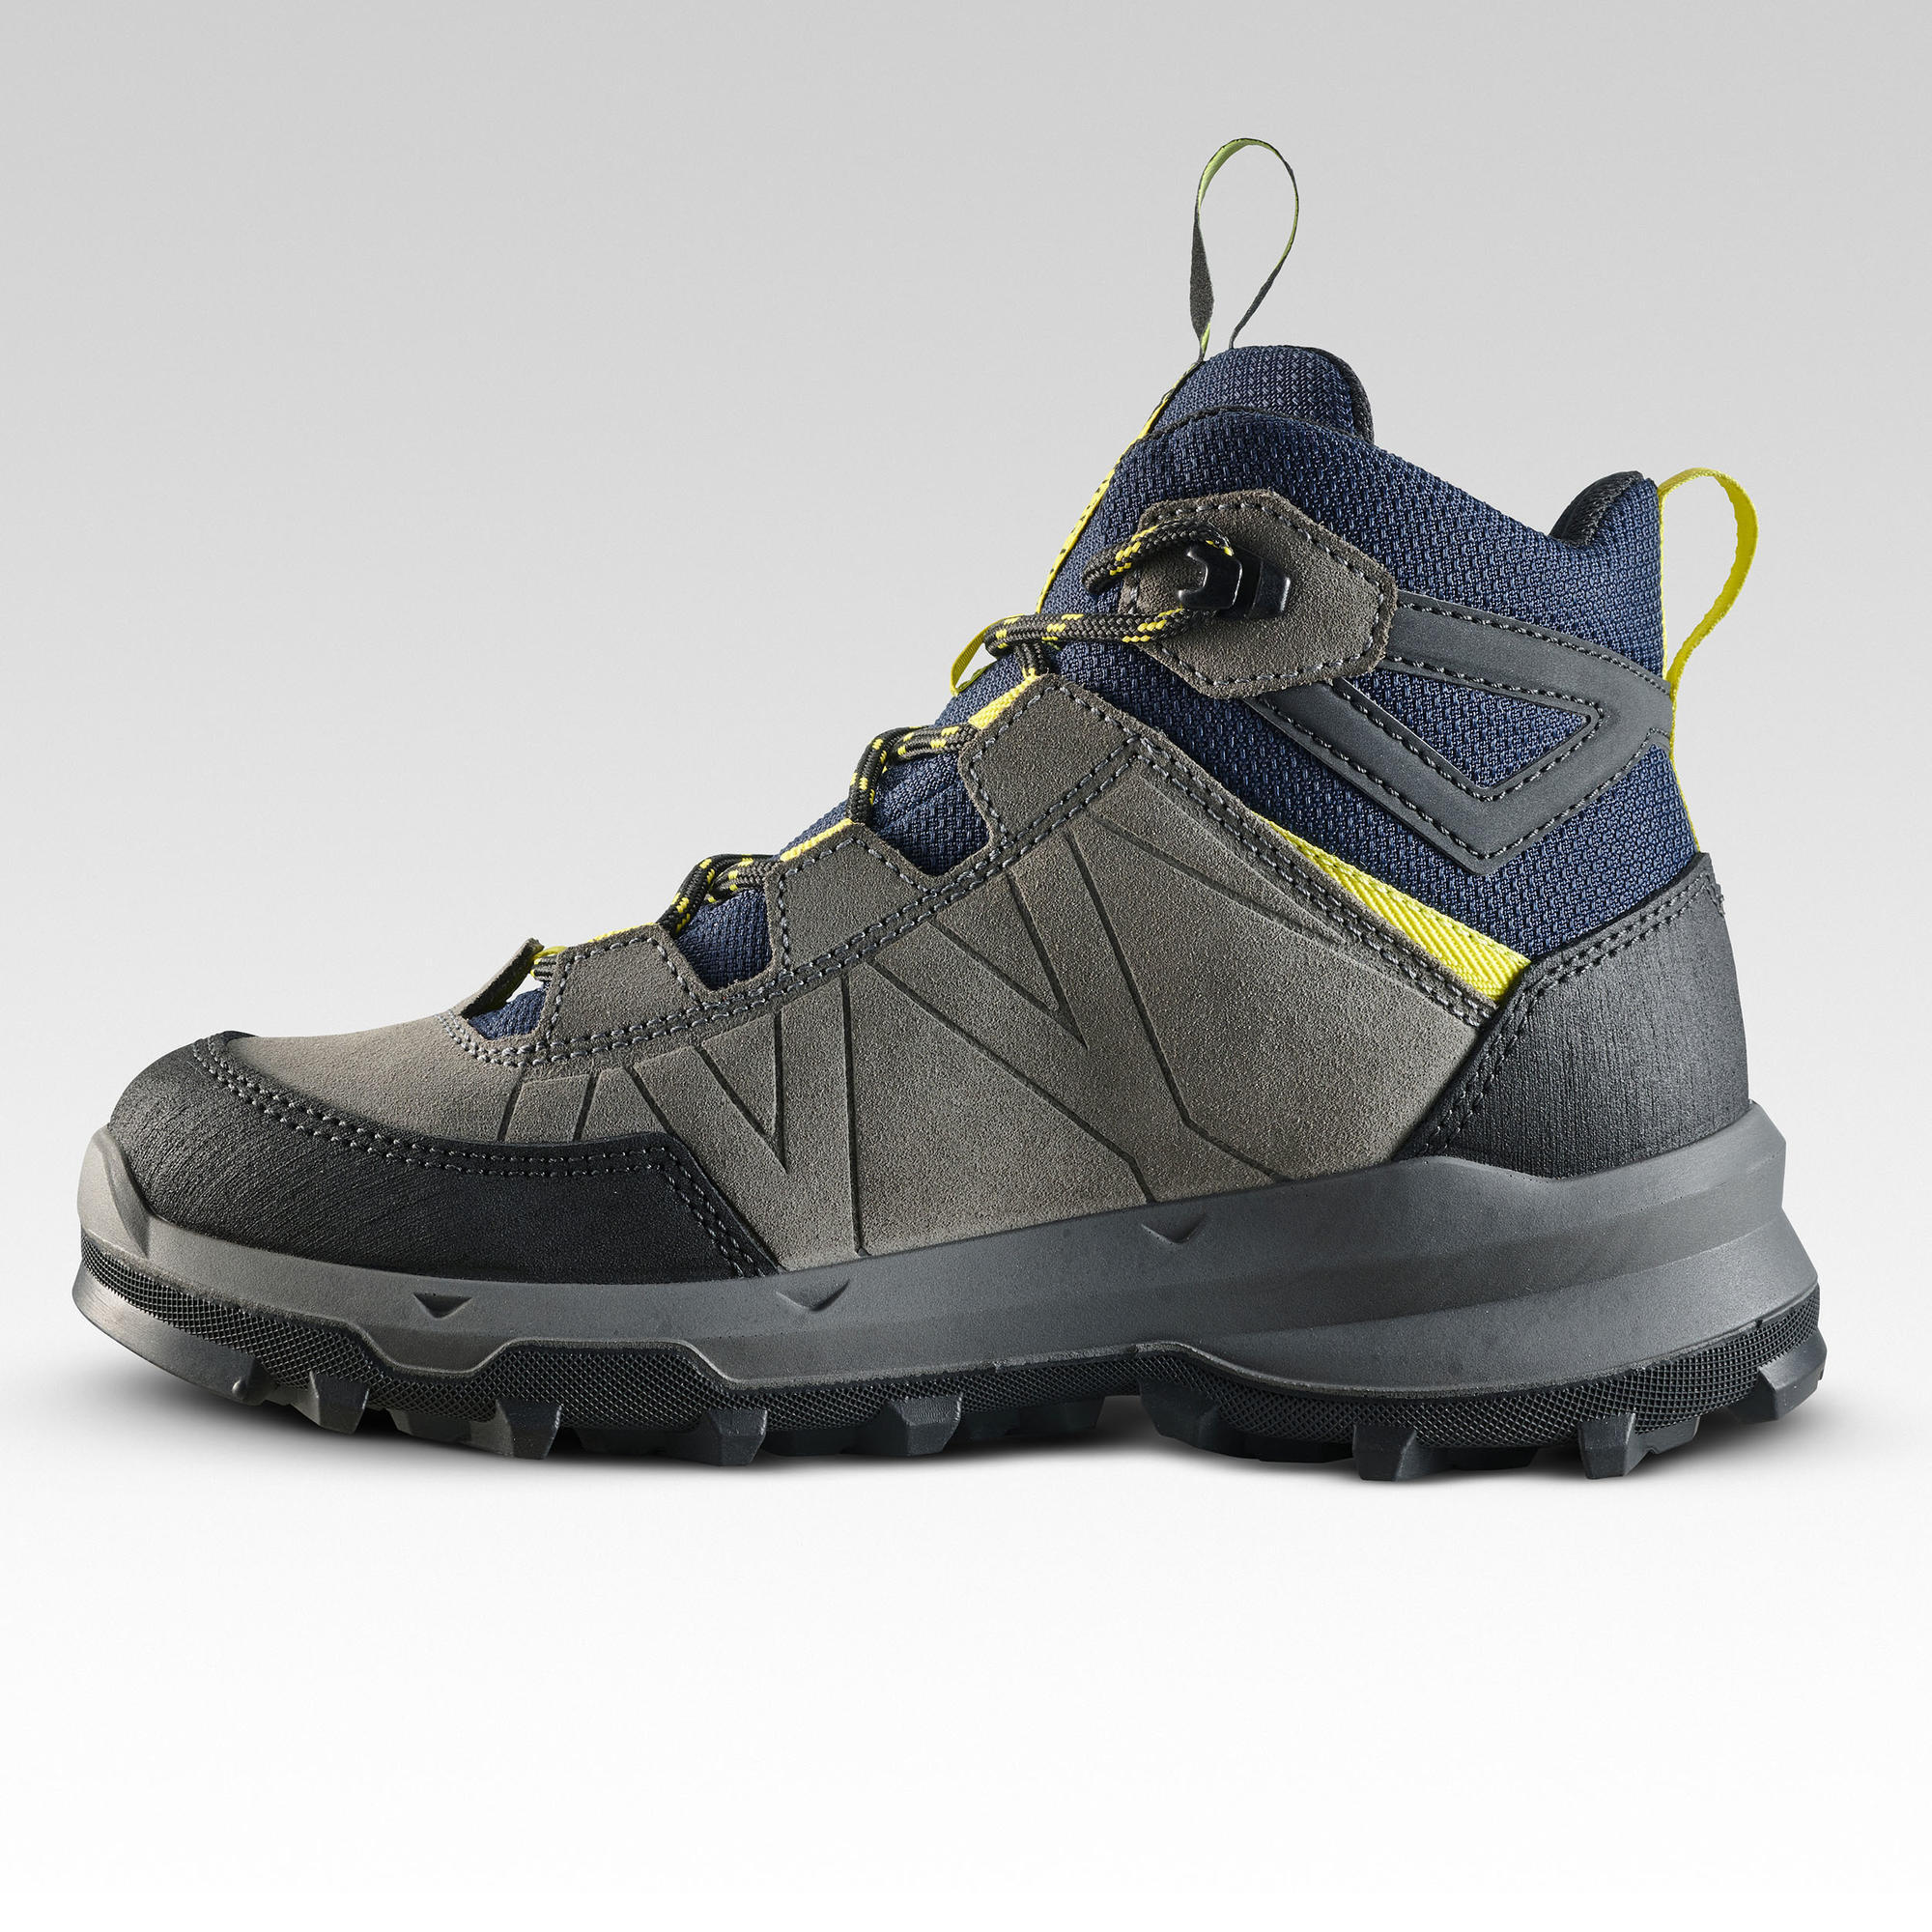 Kids’ Waterproof Mountain Walking Boots - MH500 Sizes 10-6 4/8